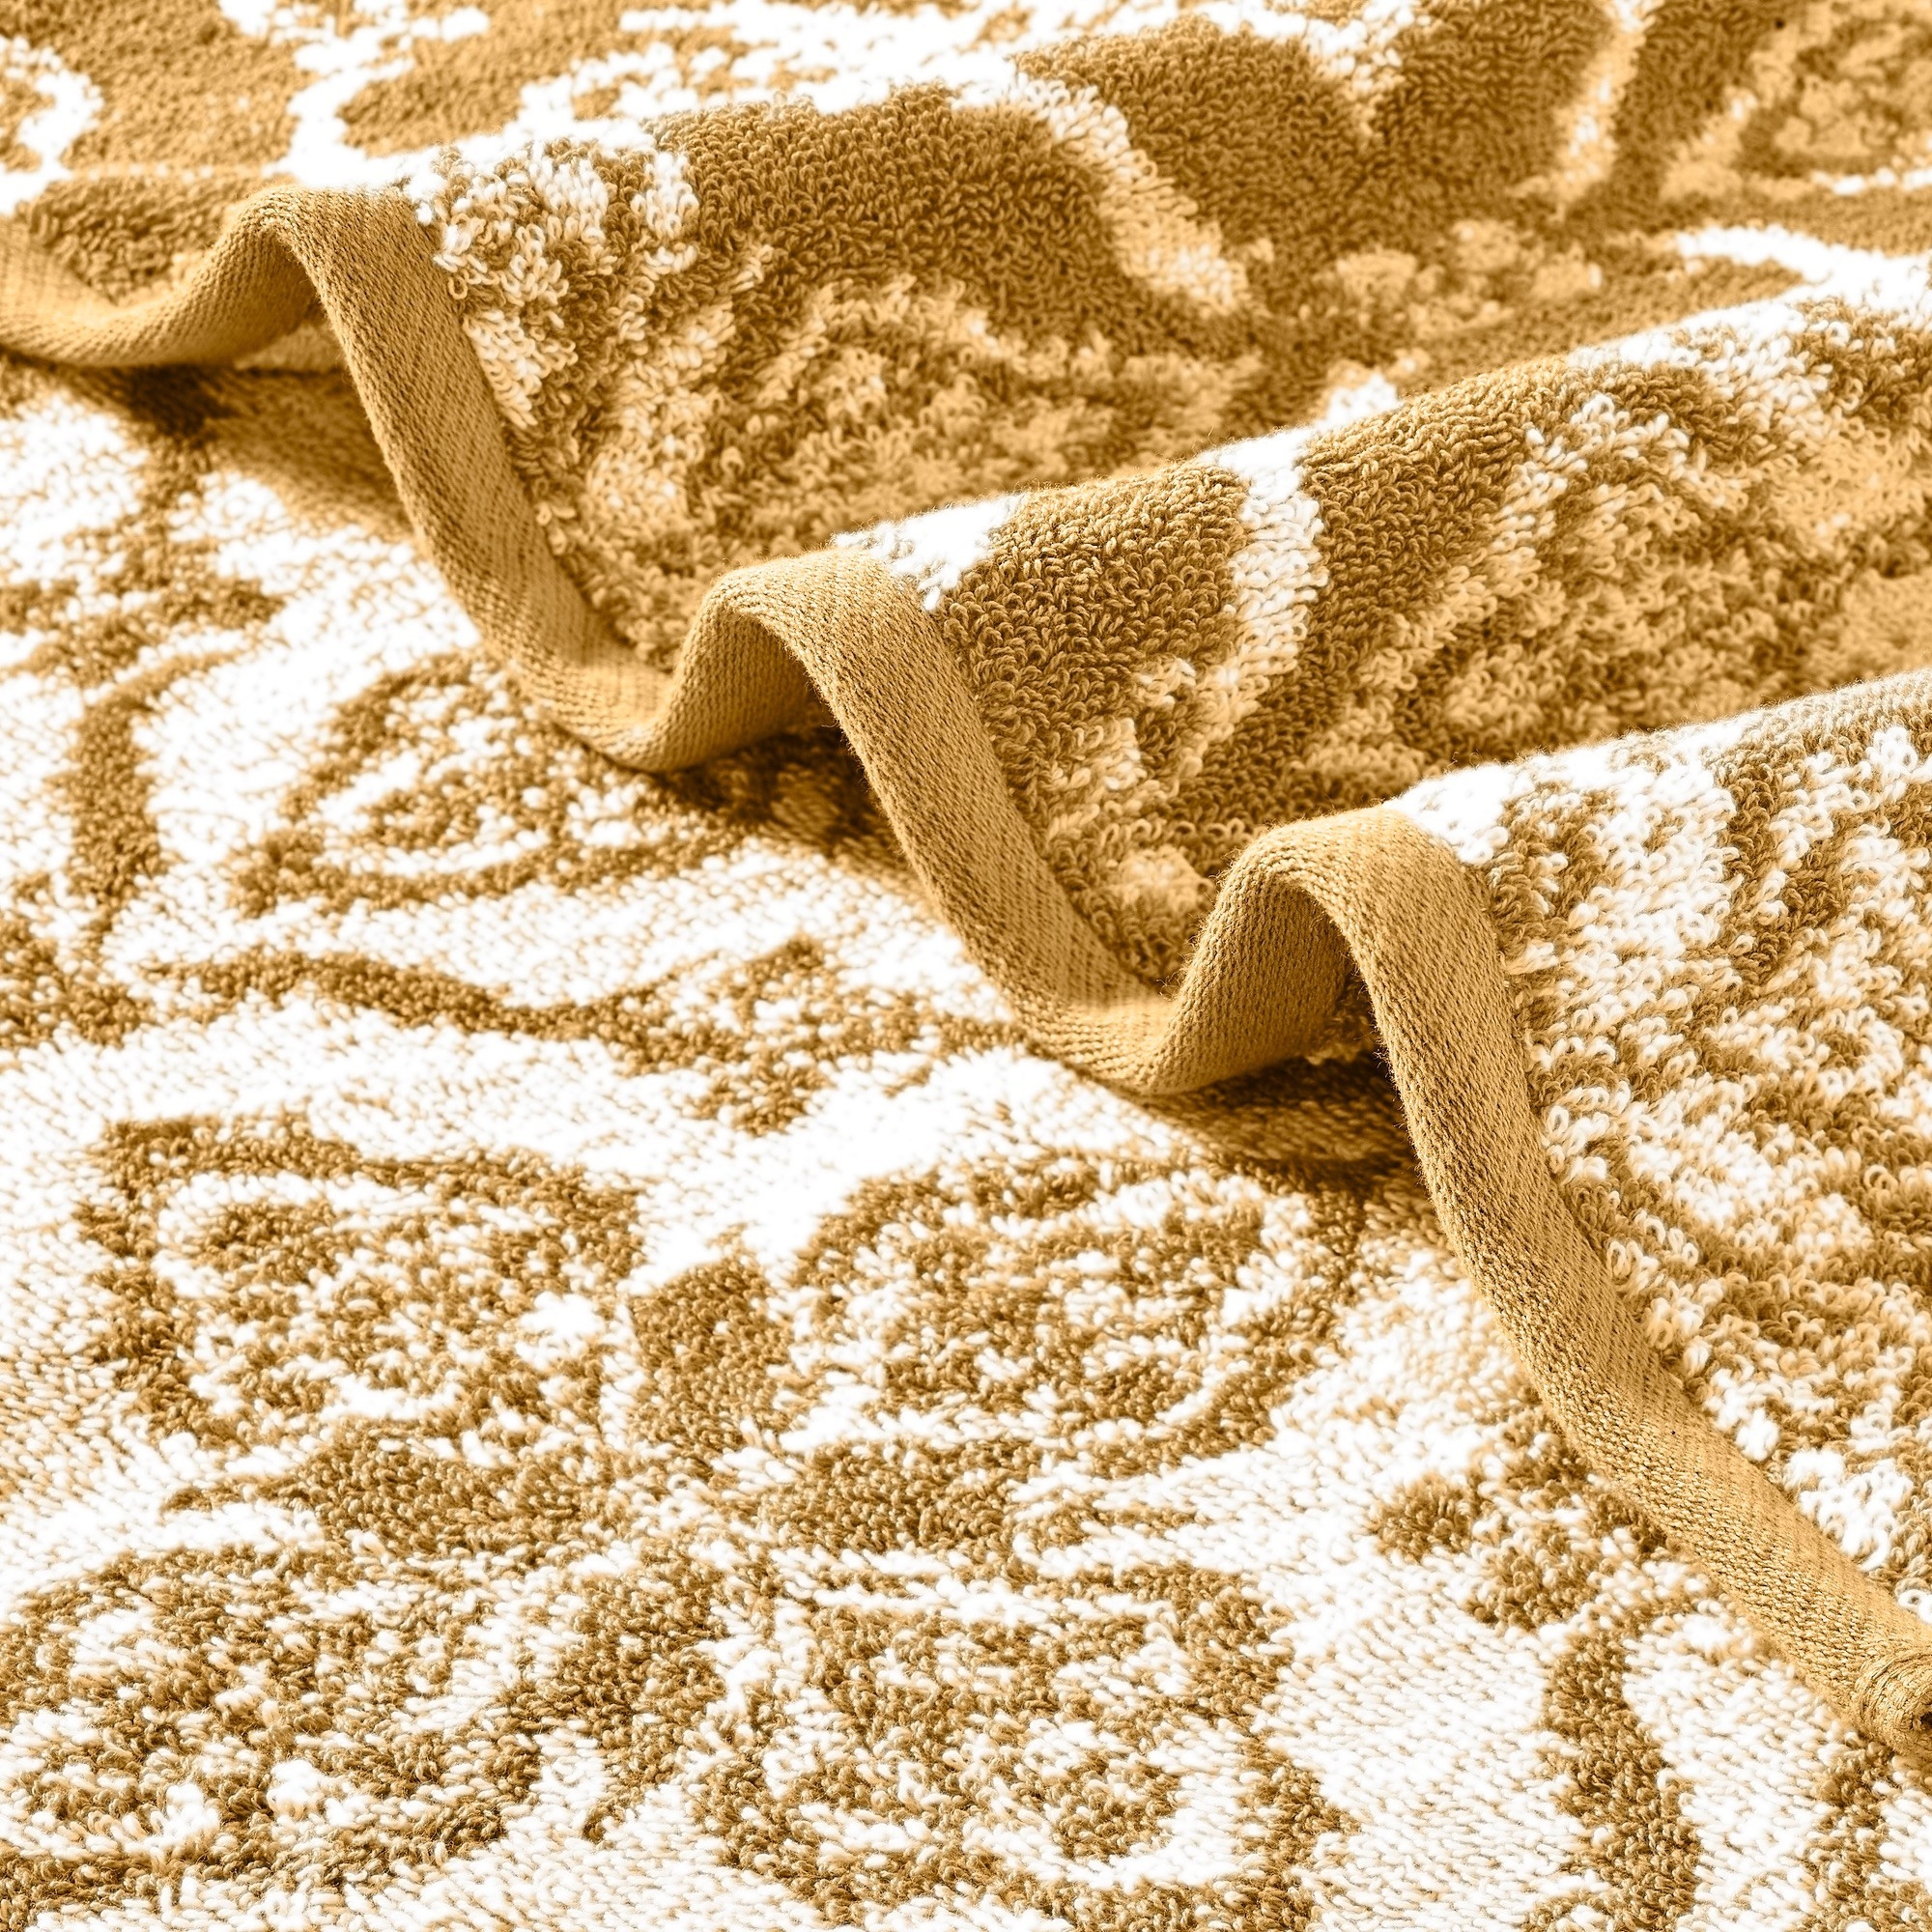 Naja 6pc Cotton Towel Set, Jacquard, White, Yellow By The Urban Port- Saltoro Sherpi